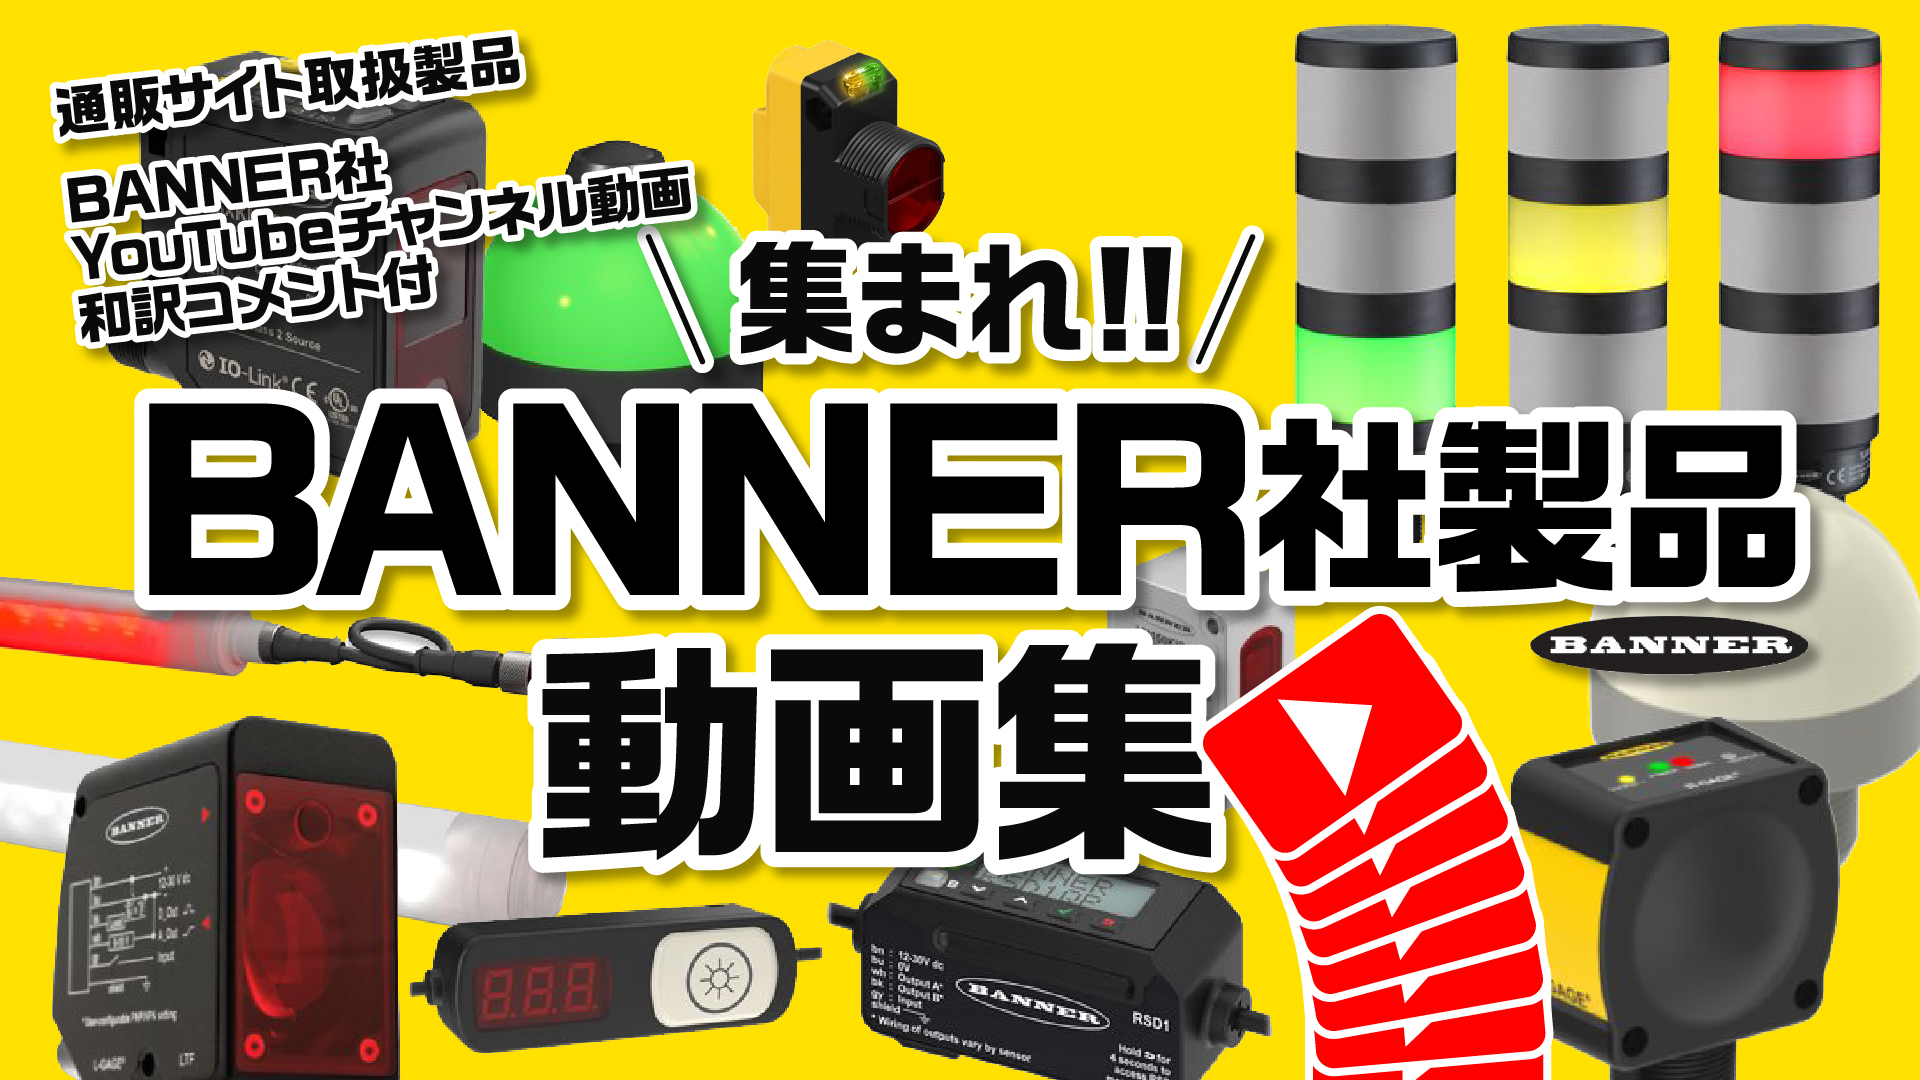 BANNER ENGINEERING 動画集 - 英語動画 製品概要説明